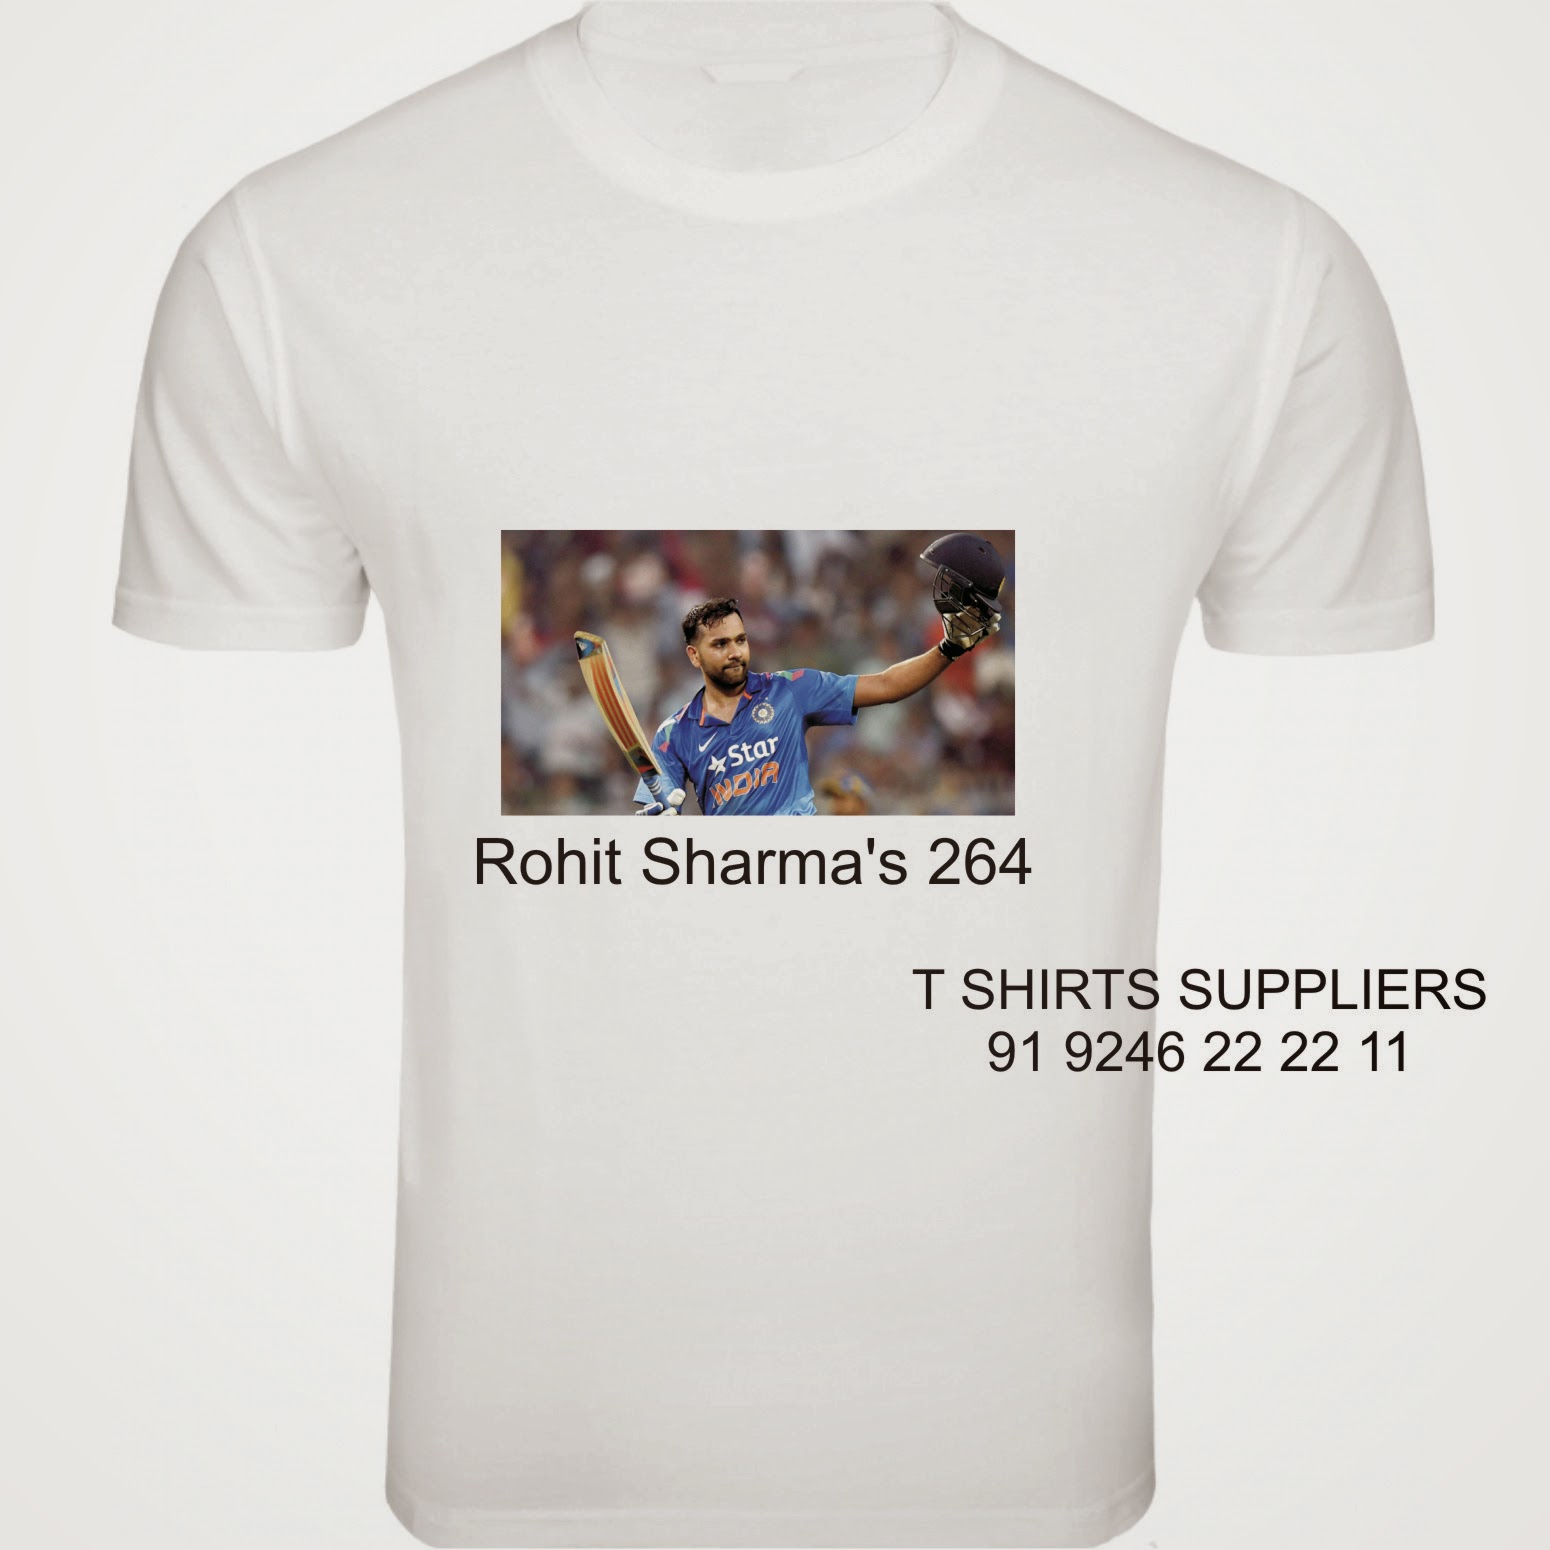 rohit sharma printed t shirt